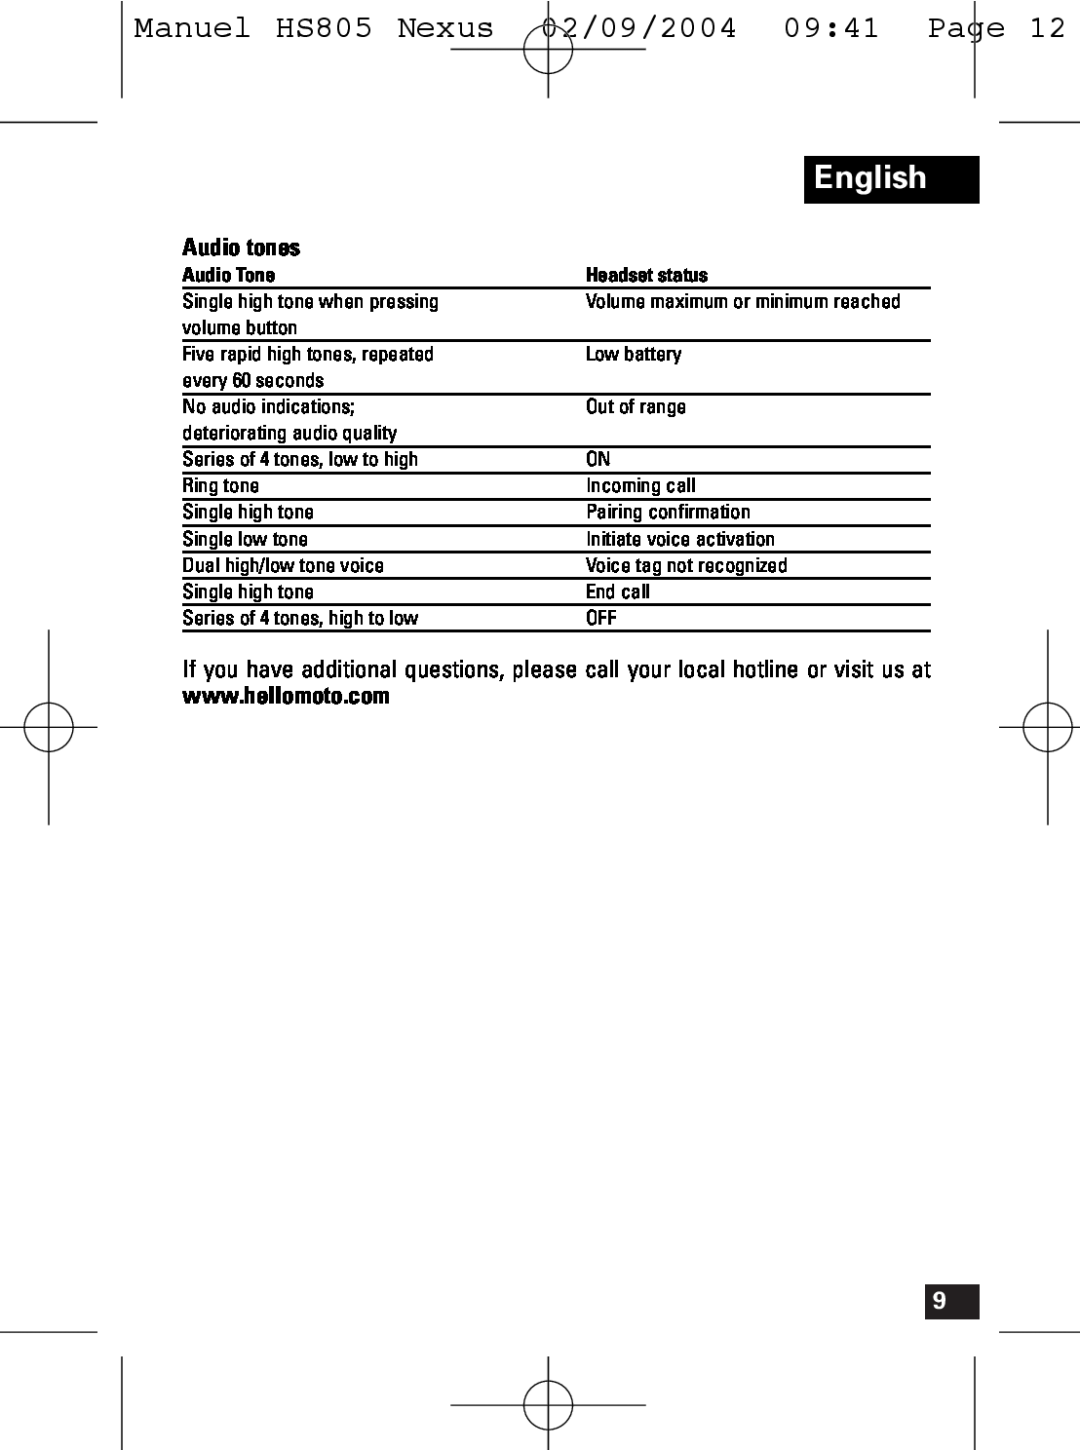 Motorola manual Manuel HS805 Nexus, 02/09/2004, Page, Audio tones, English, Audio Tone, Headset status 